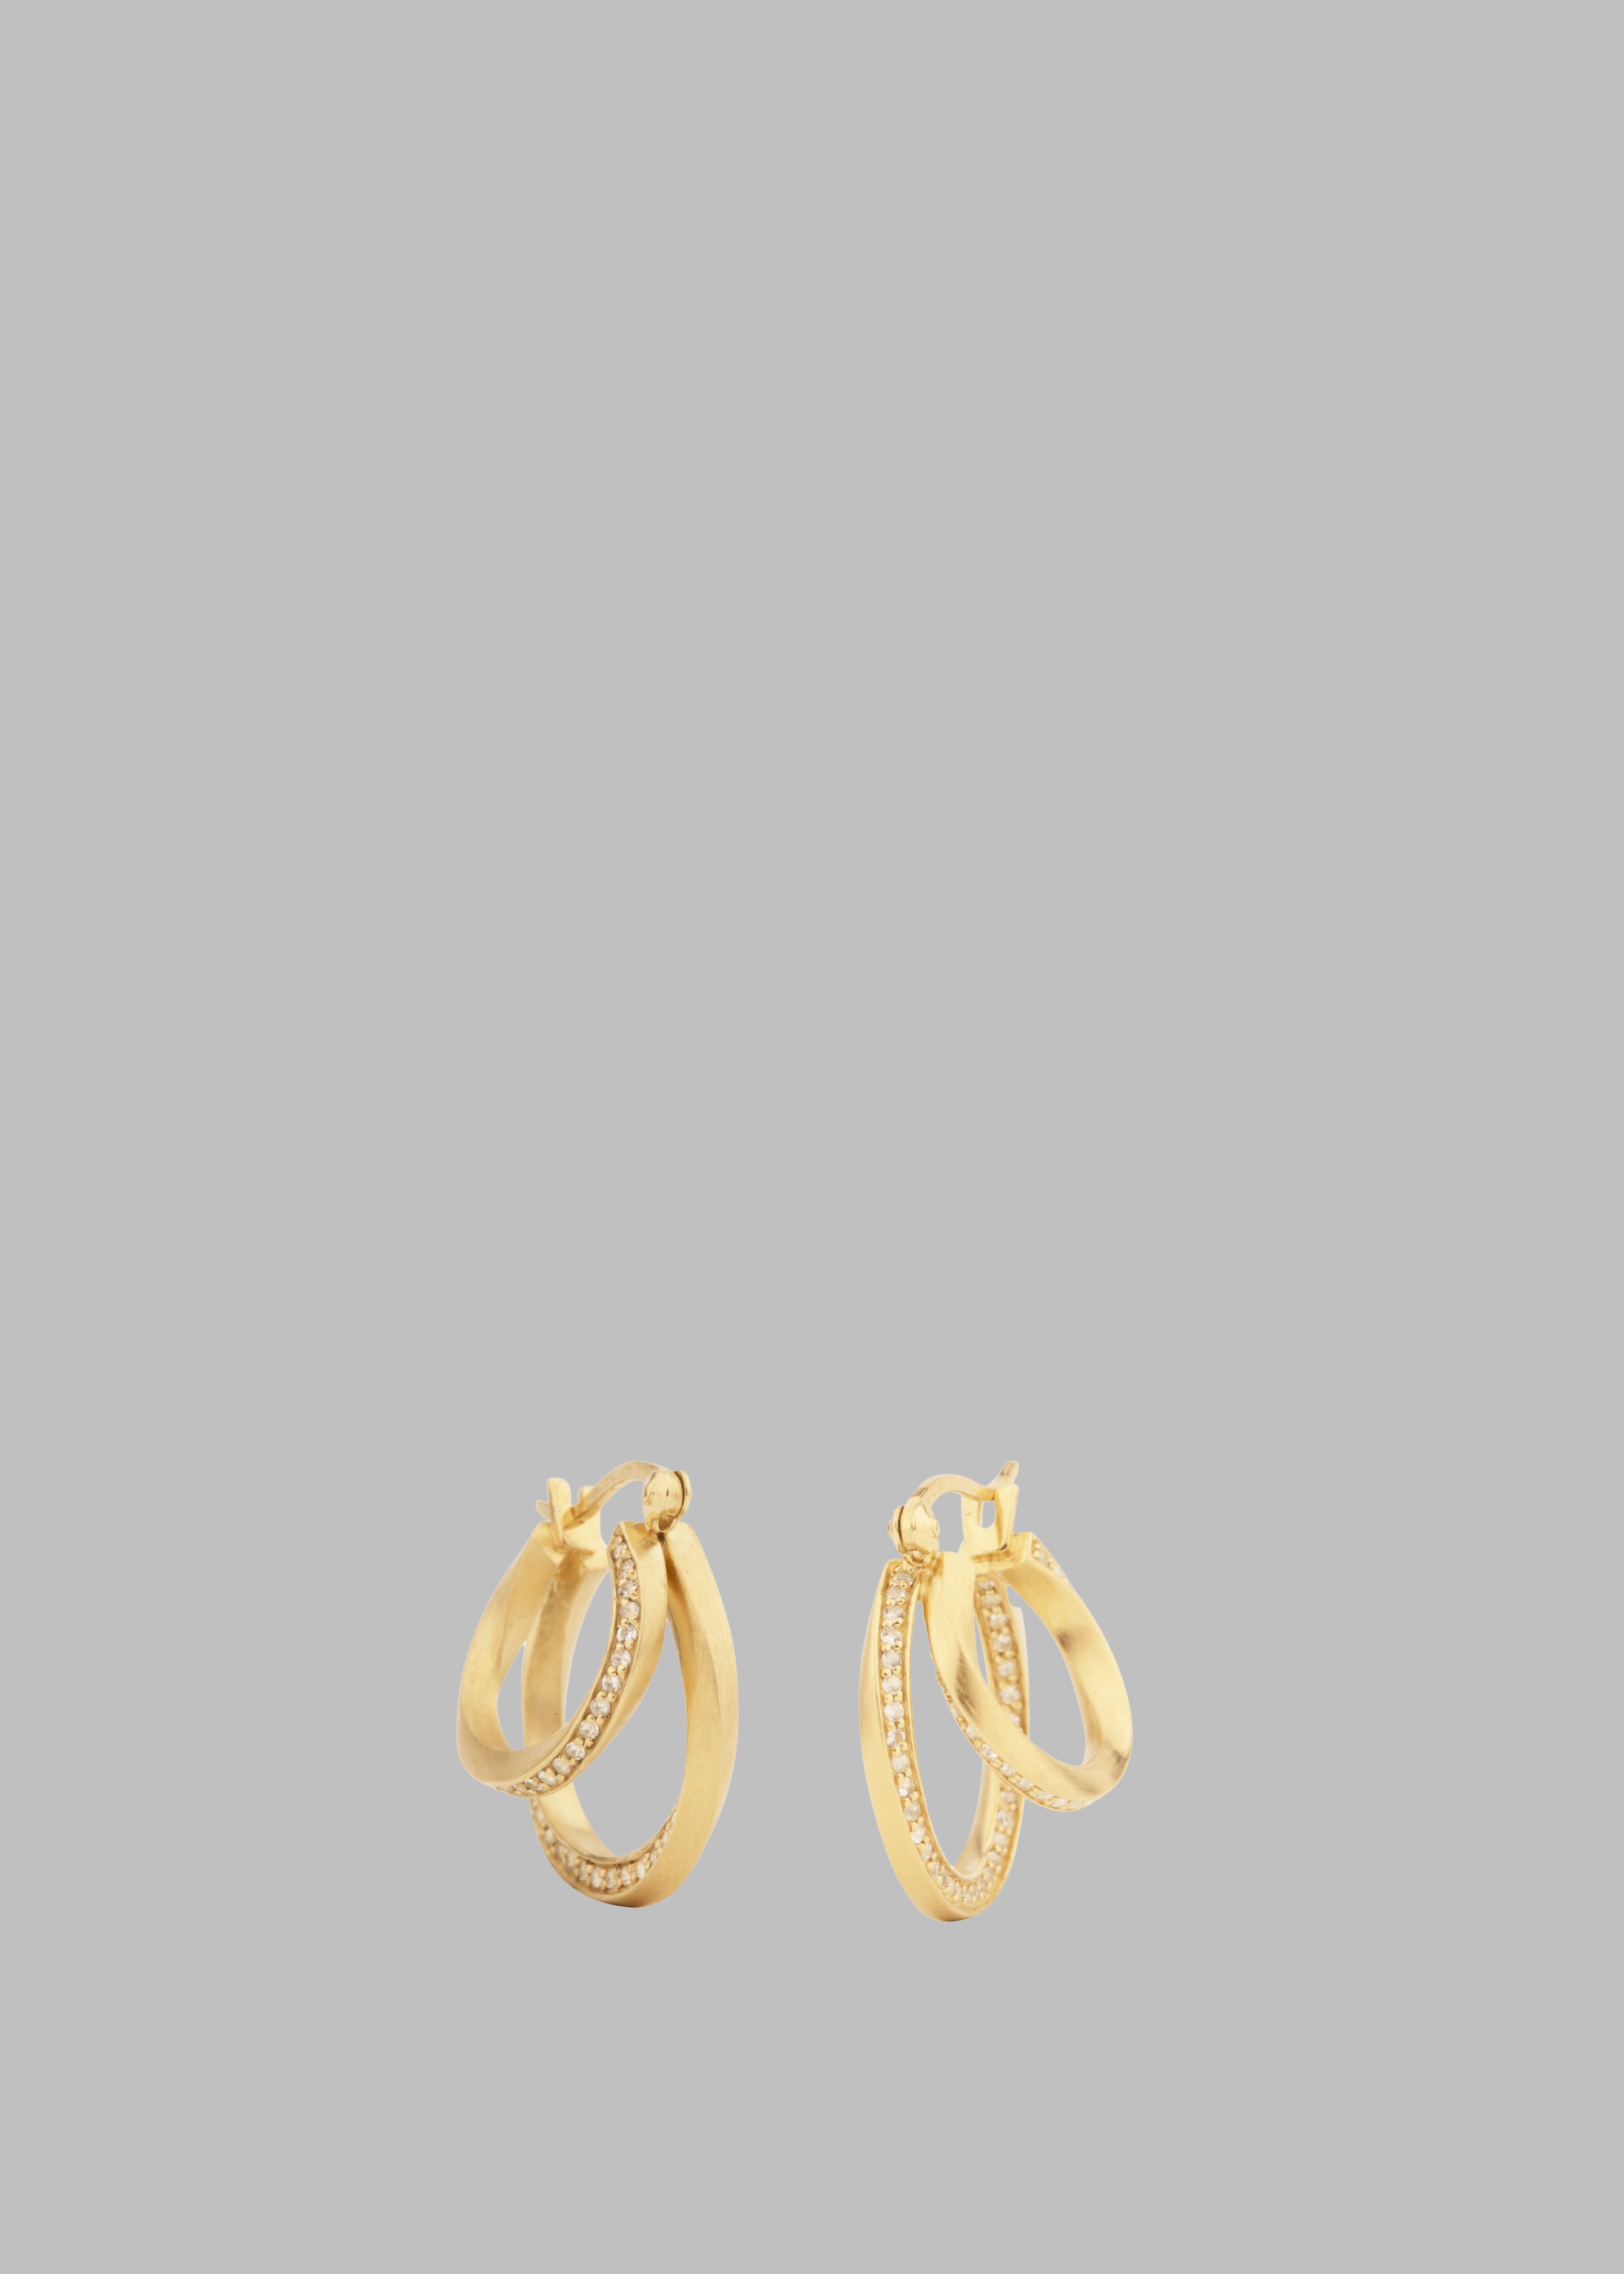 Completedworks Suburbs Earrings - Gold Vermeil